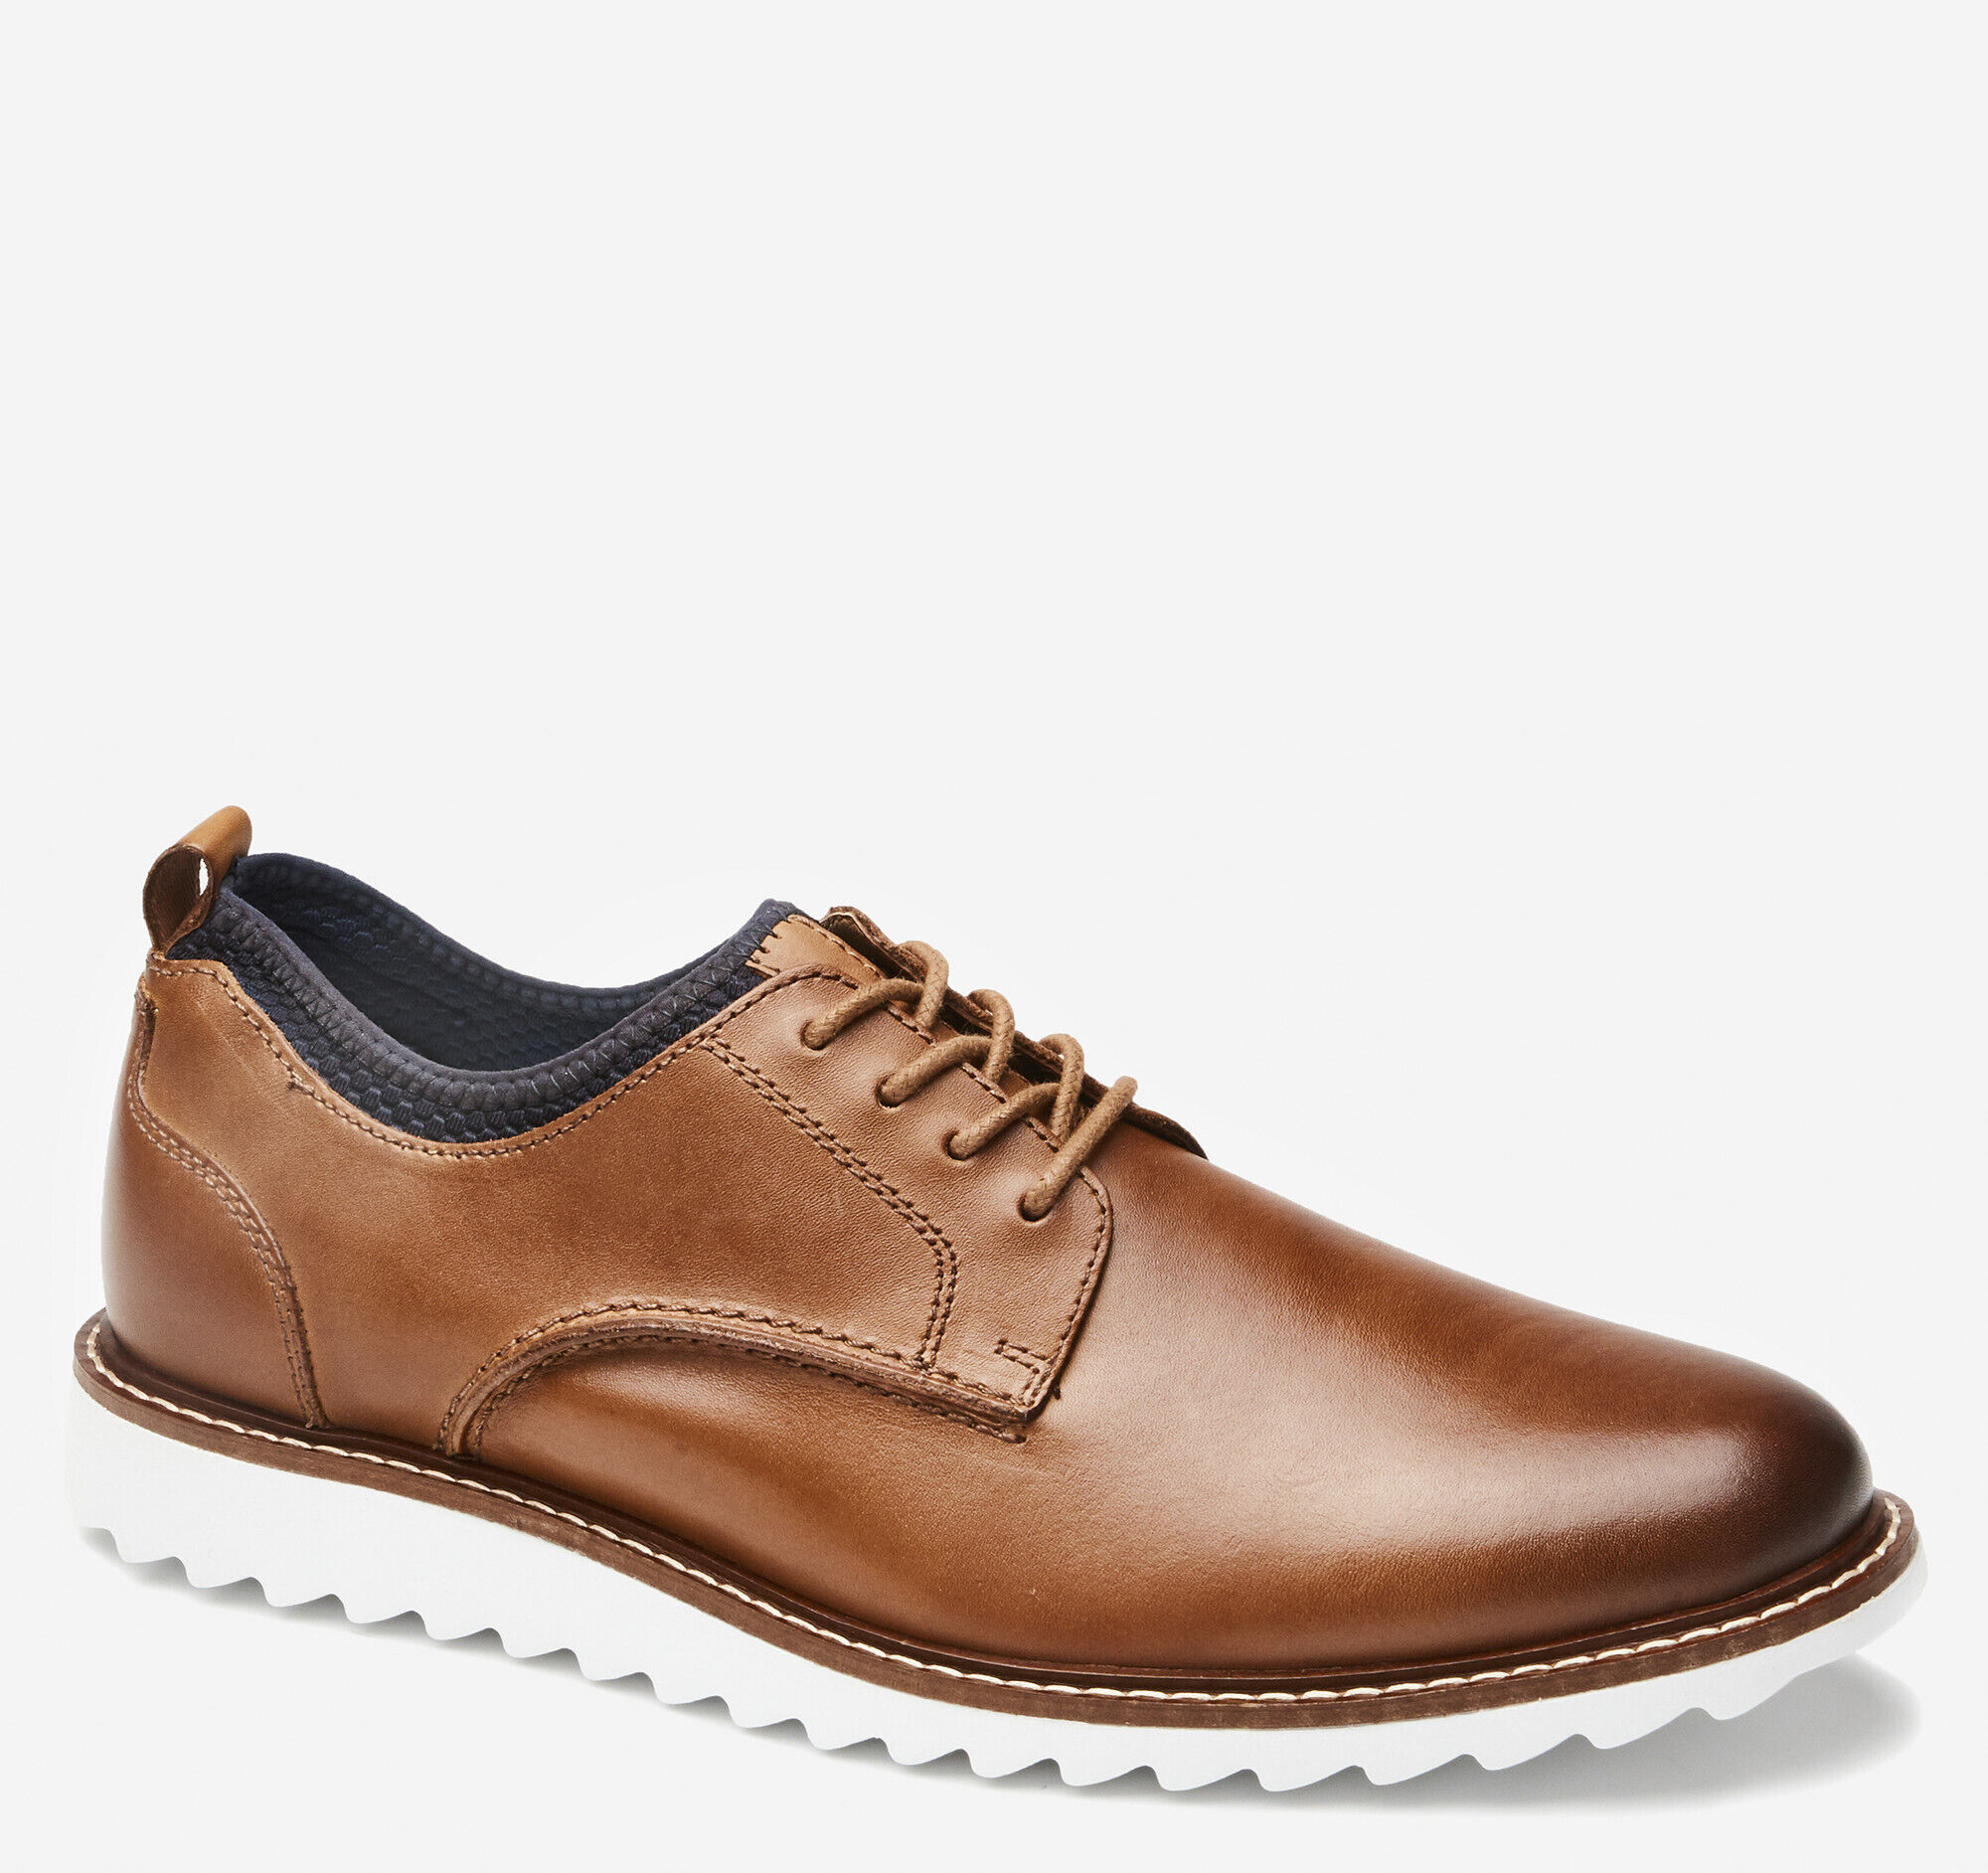 271796 ES50 Men's Shoes Size 13 M Brown Leather Lace Up Johnston & Murphy 